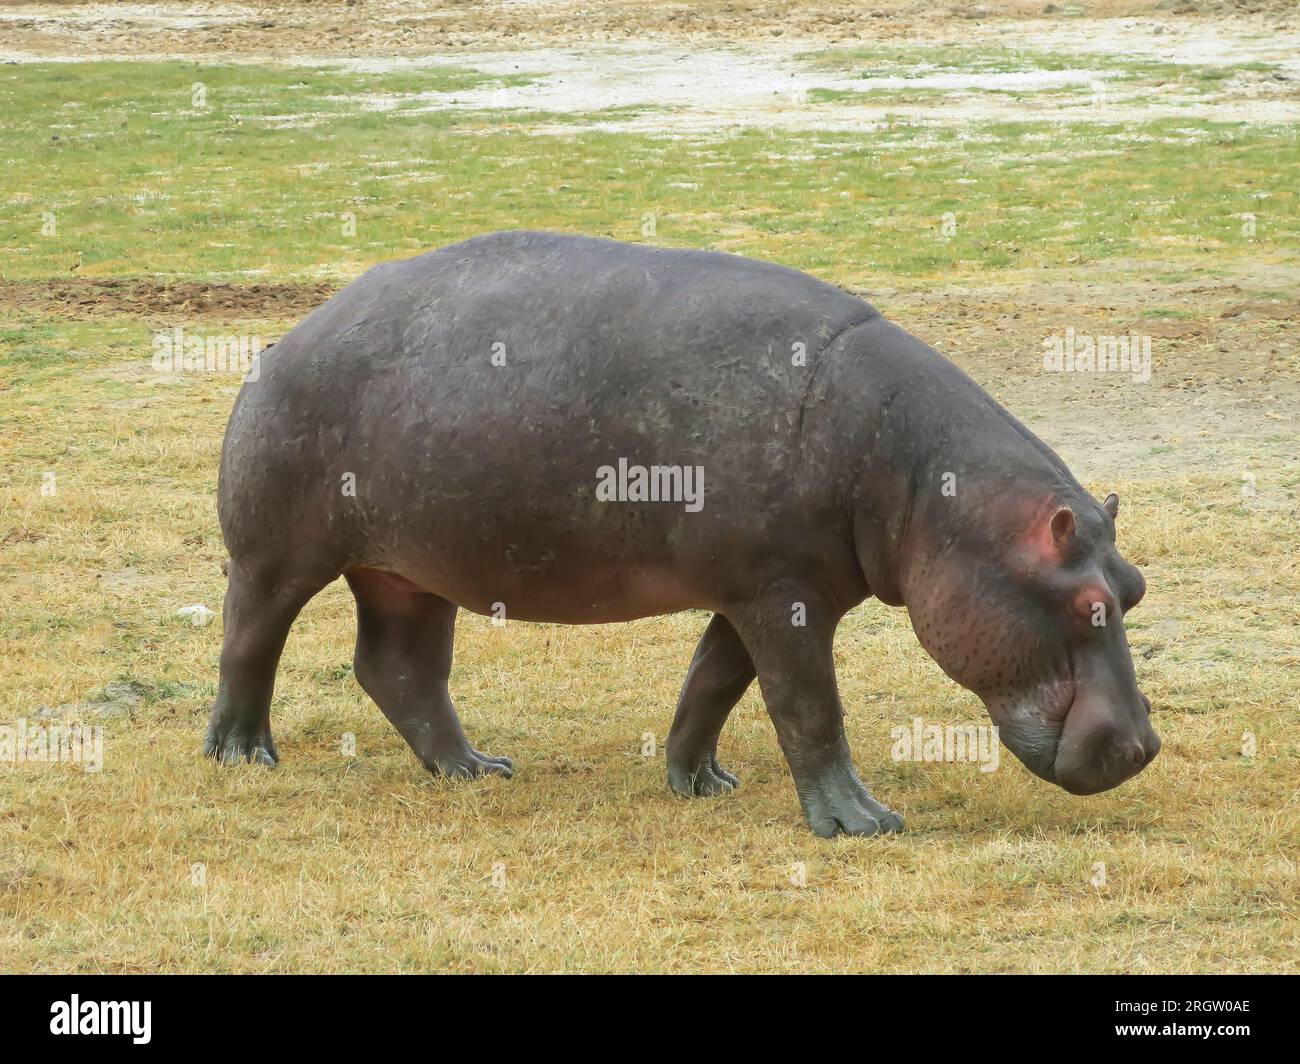 Hippopotamus Finding Nourishment on Flat Land Stock Photo